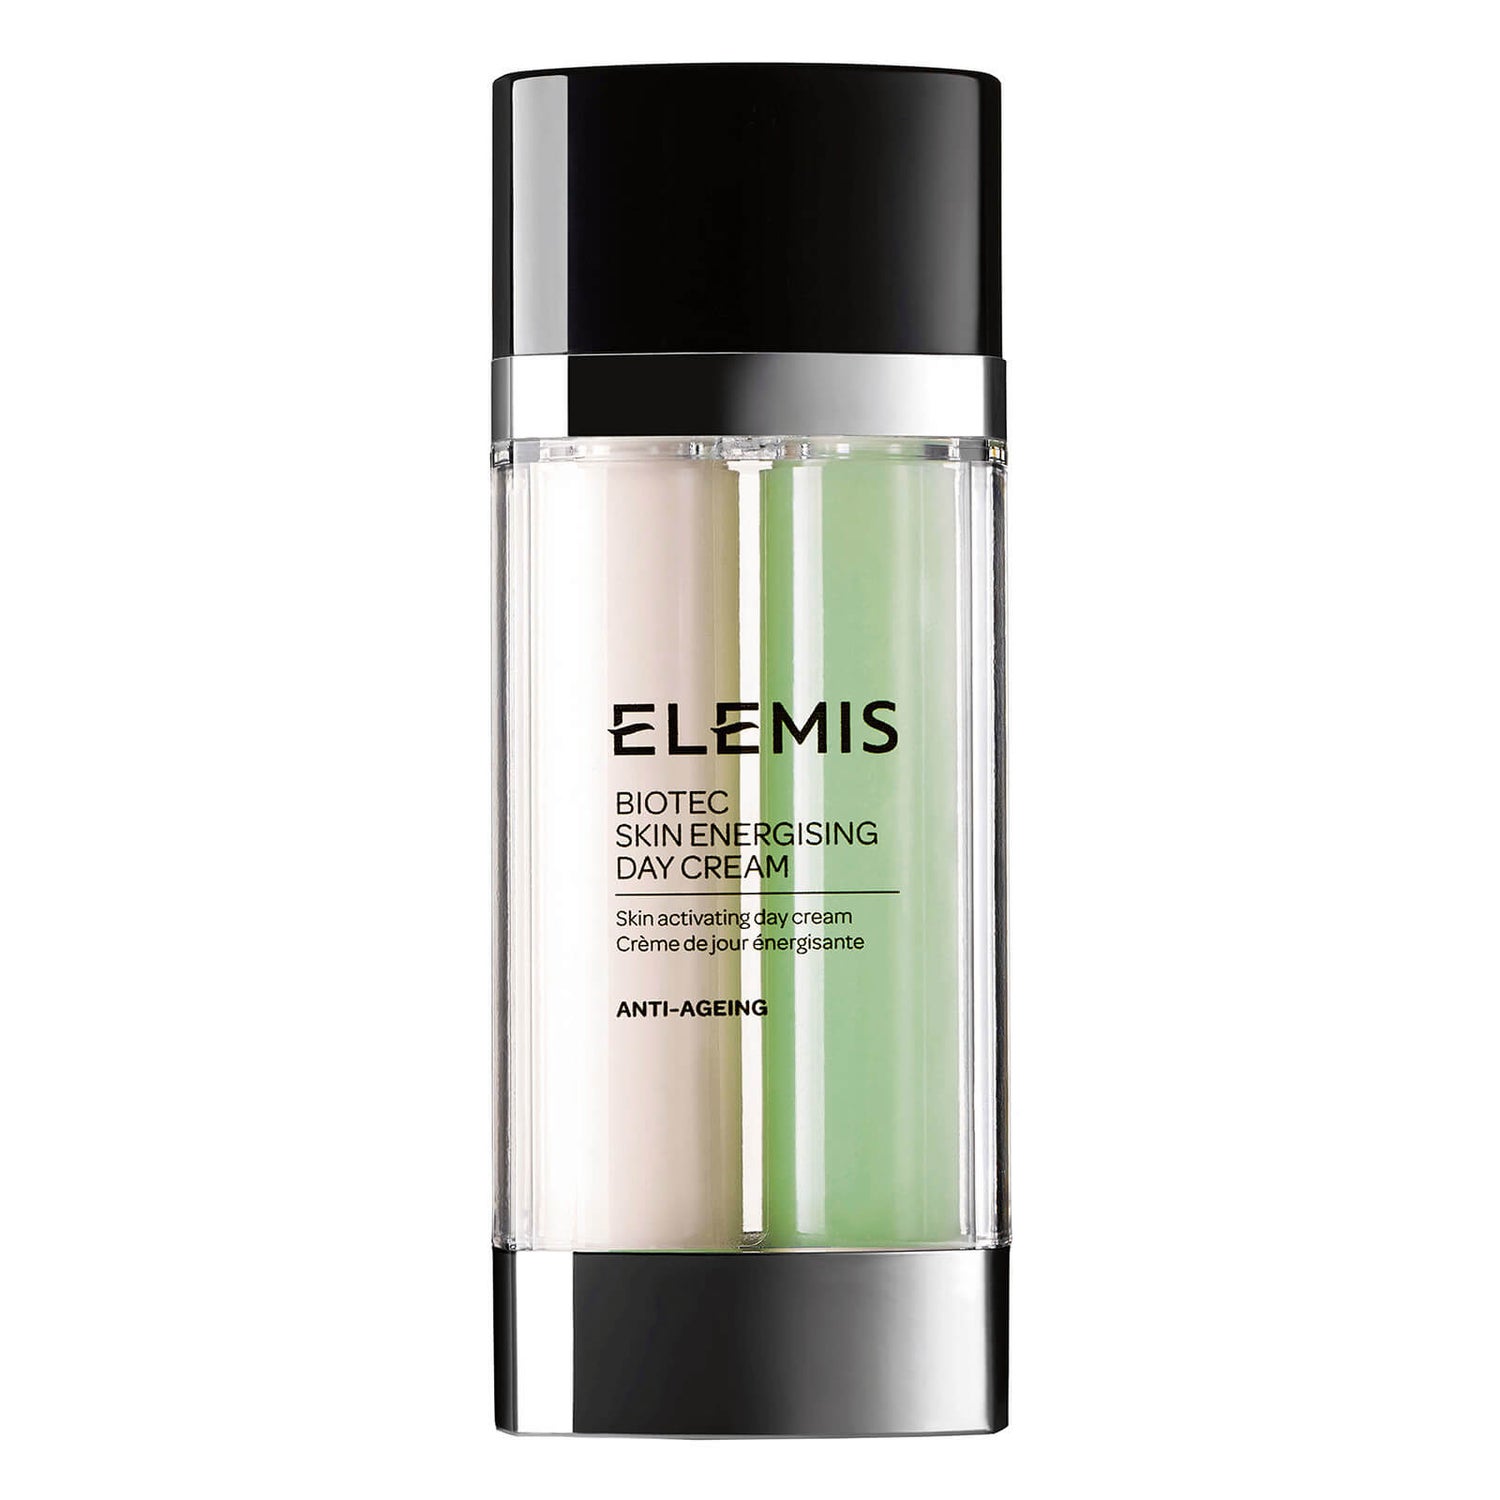 Elemis BIOTEC Skin Energising dagcreme 30 ml